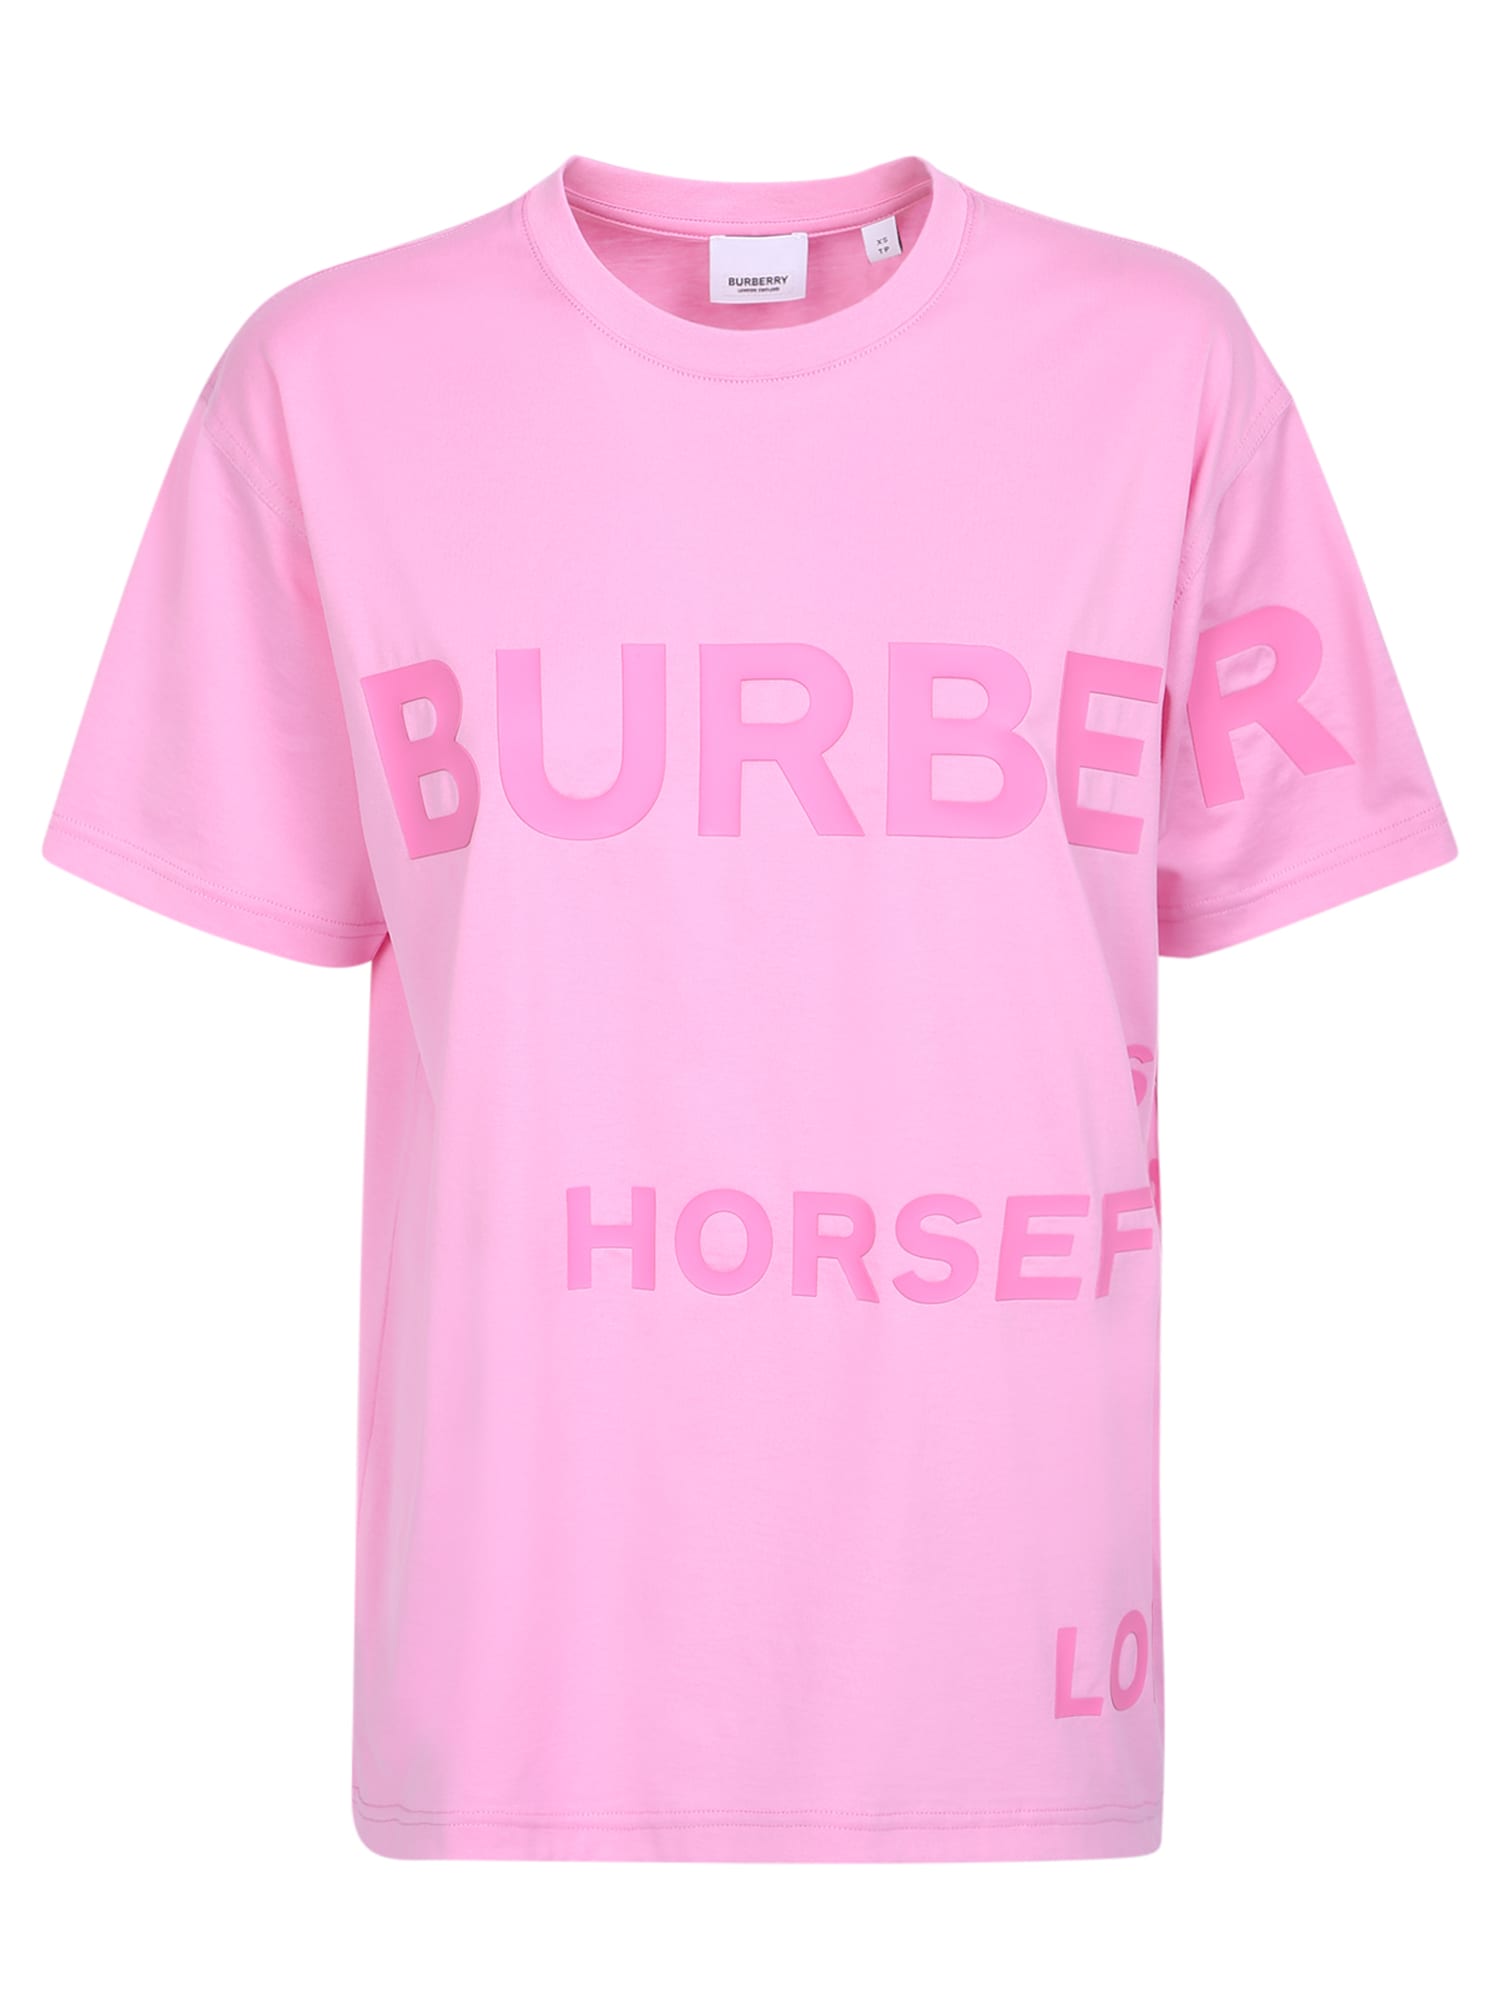 Burberry Horseferry Print T-shirt